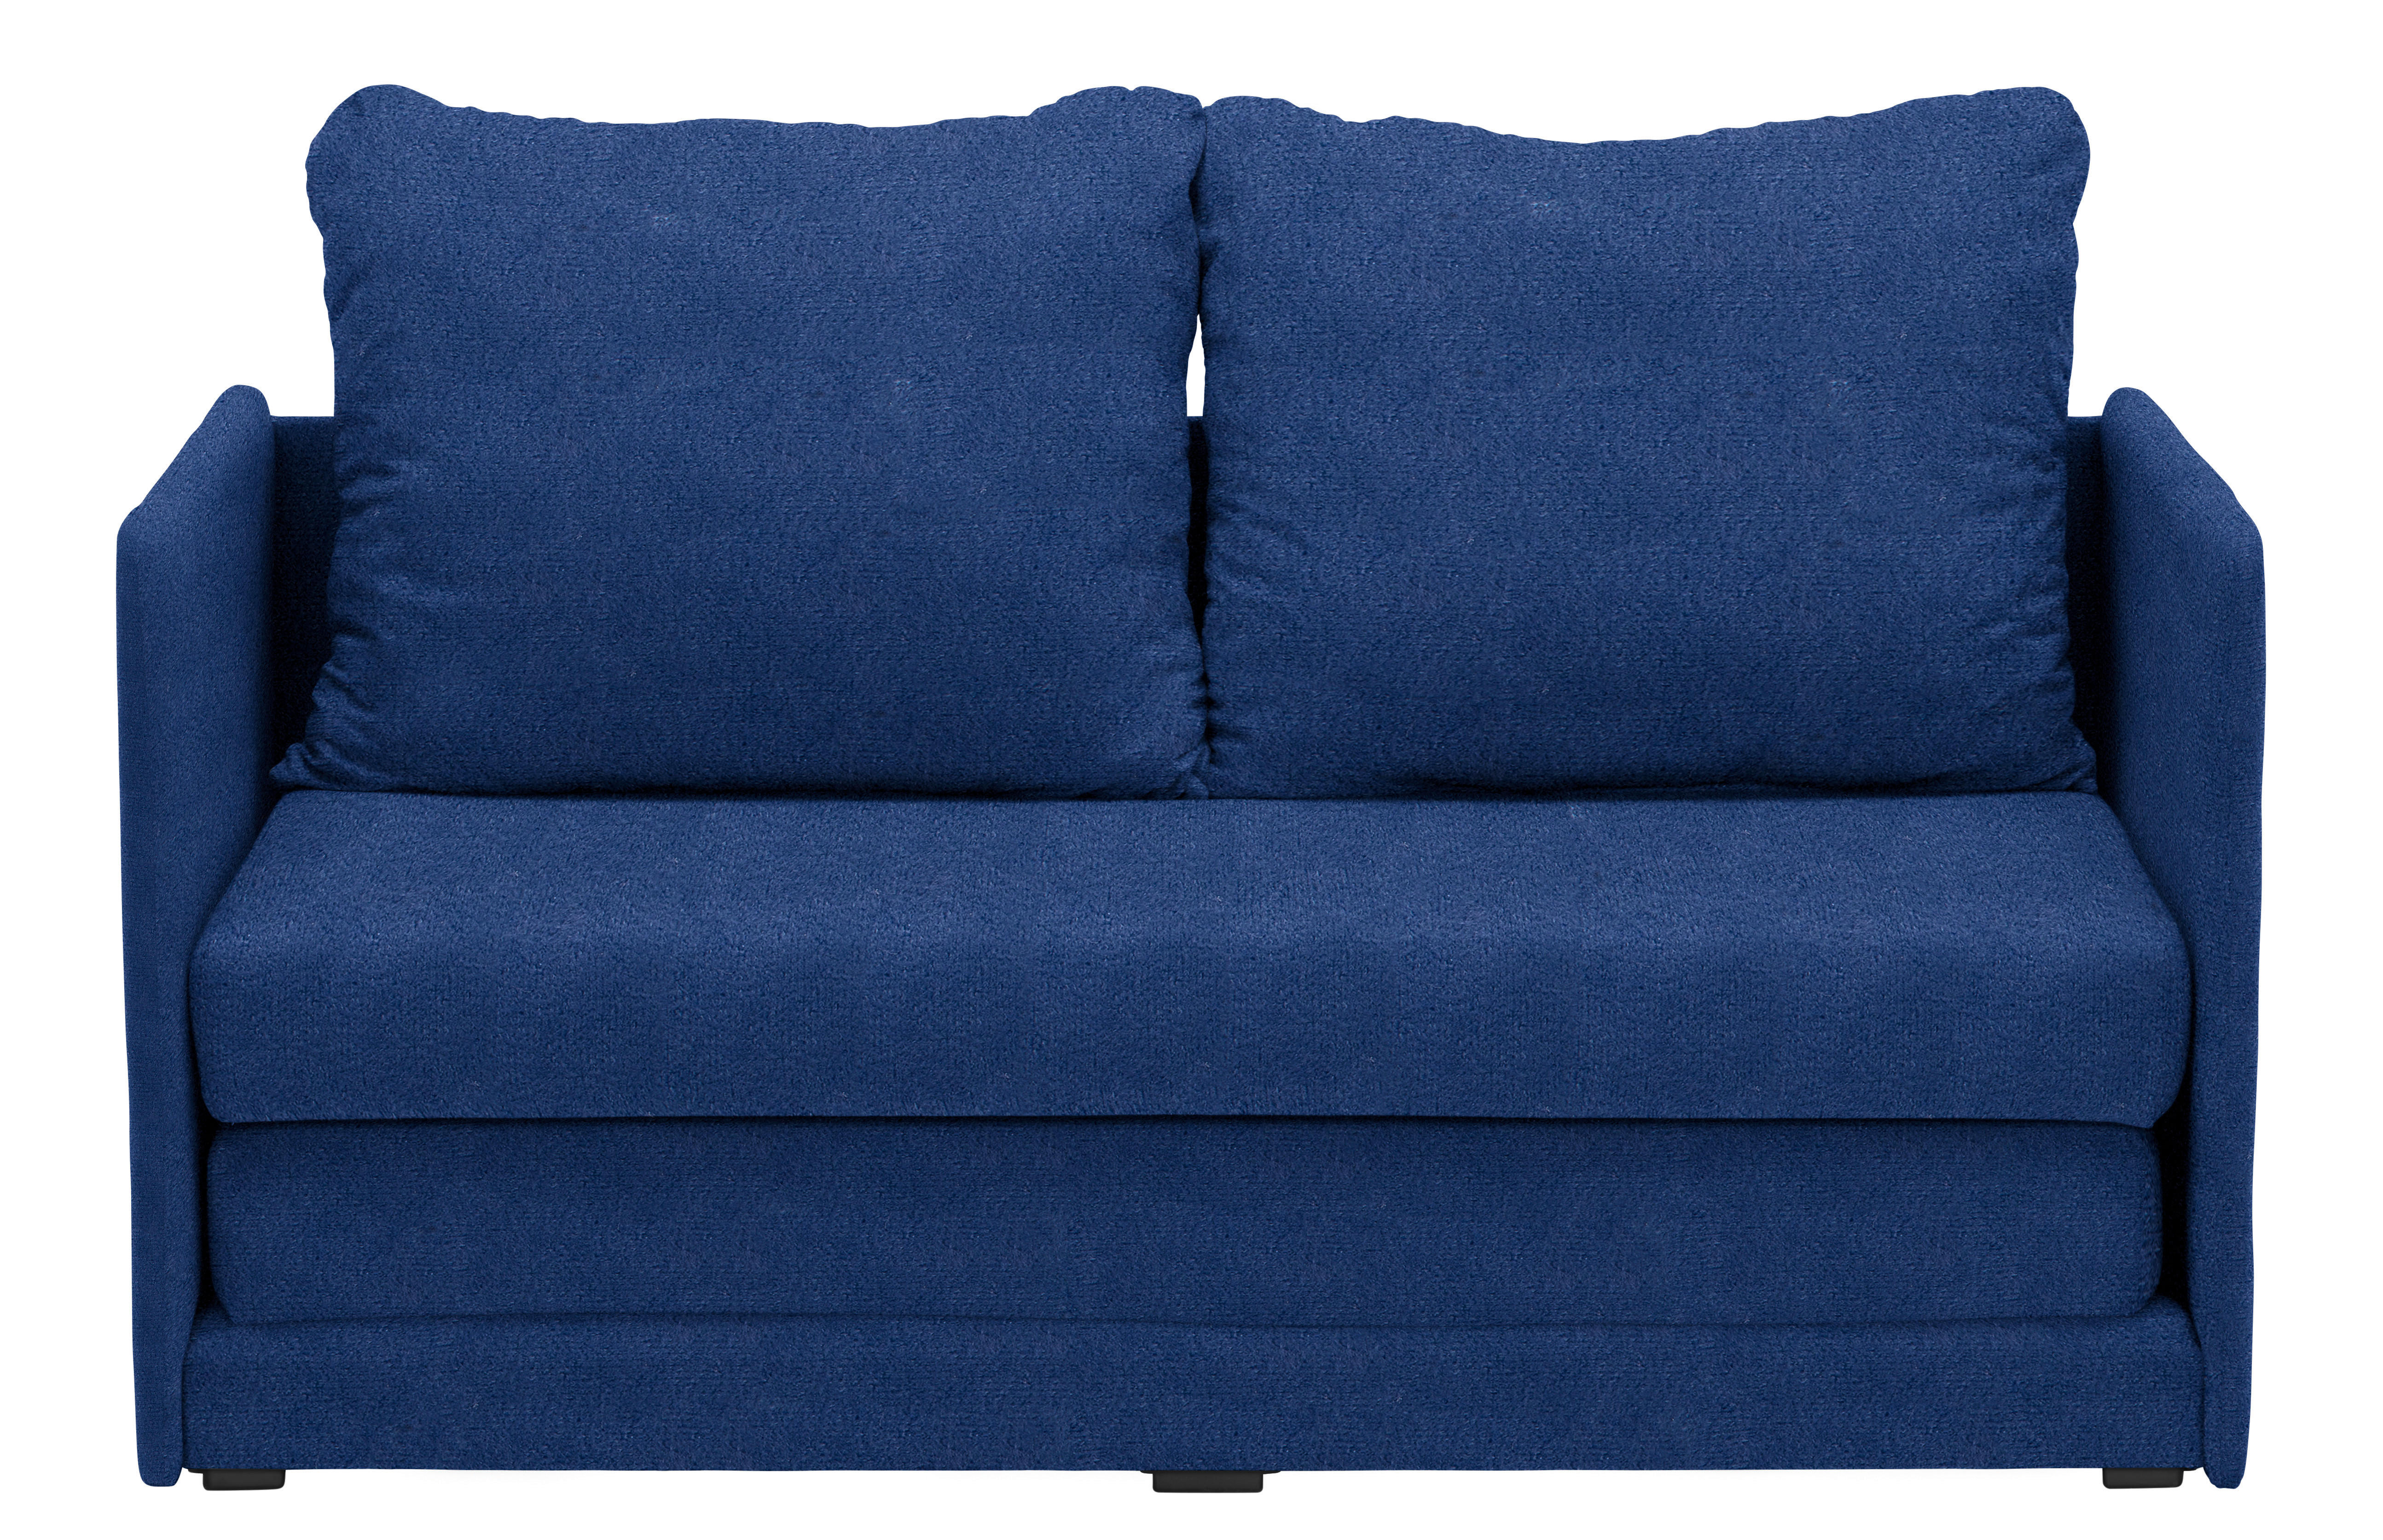 POHOVKA PRE DETI A MLÁDEŽ, textil, modrá - modrá, Lifestyle, textil (116/69/64cm) - Carryhome